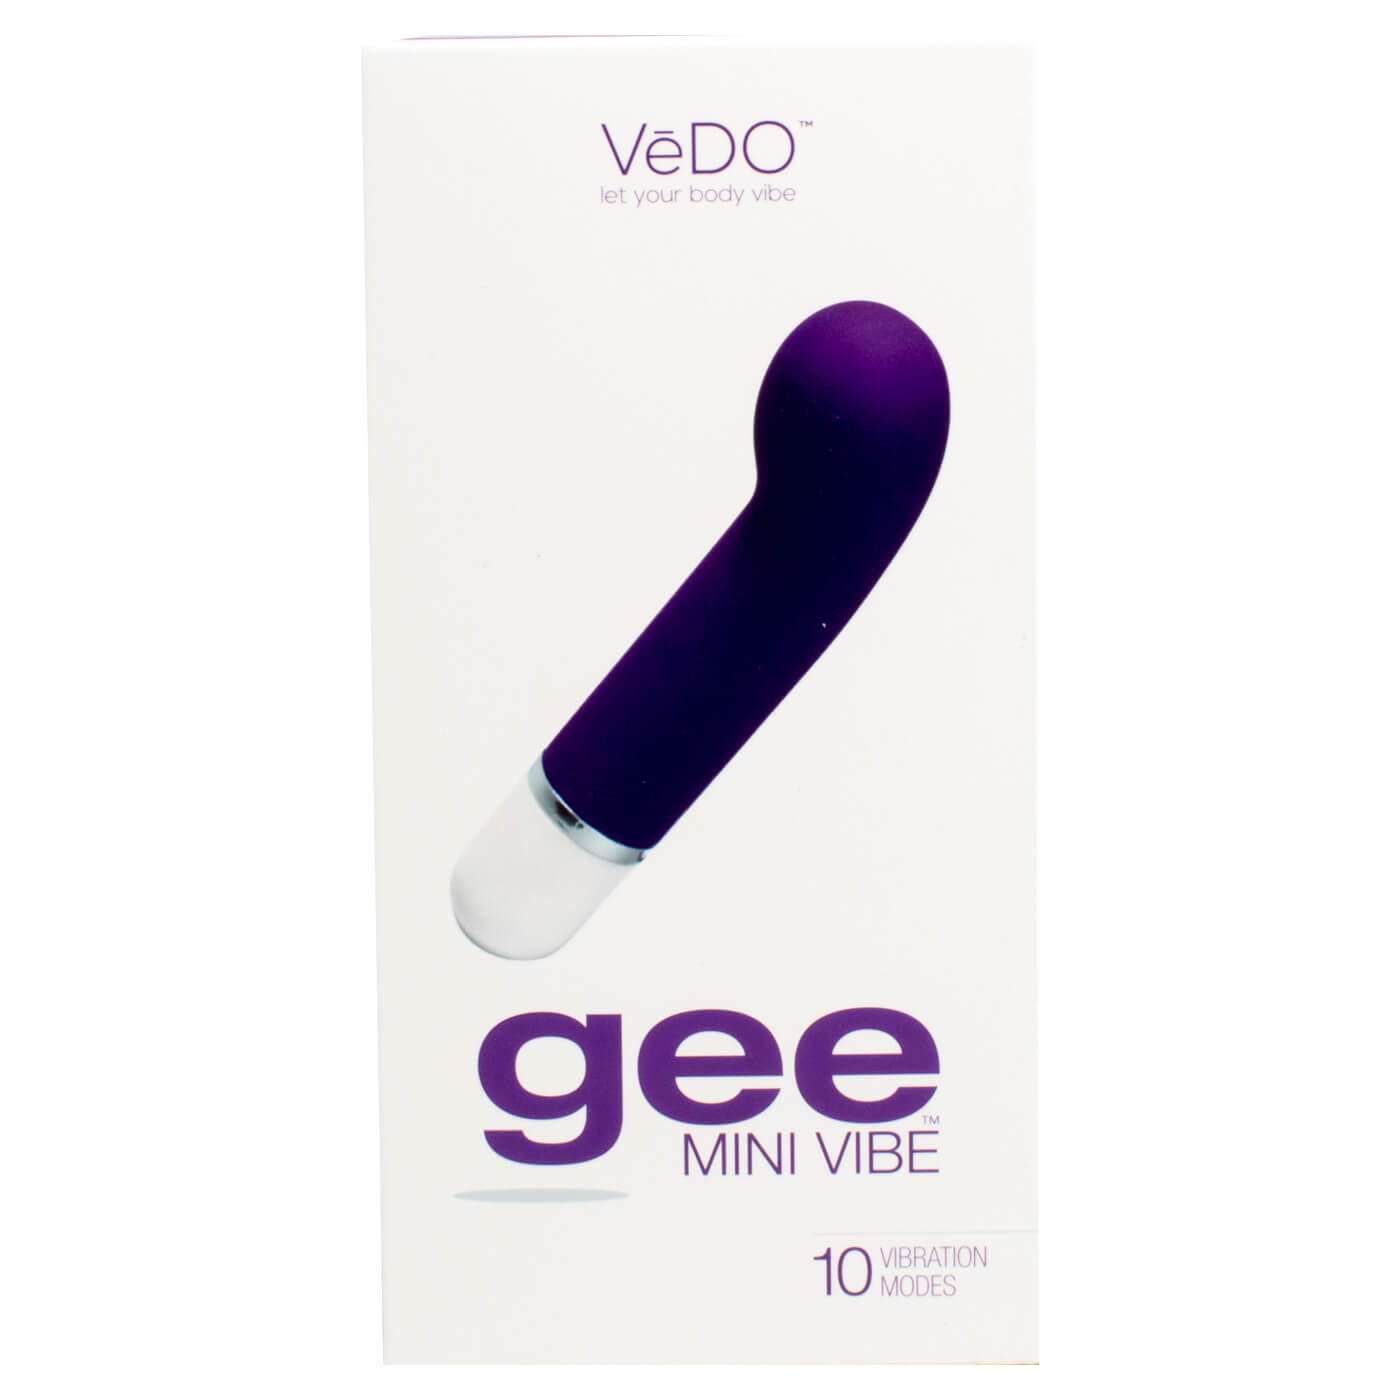 Vedo Gee Mini Extra Quiet 10 Function G-Spot Vibrator